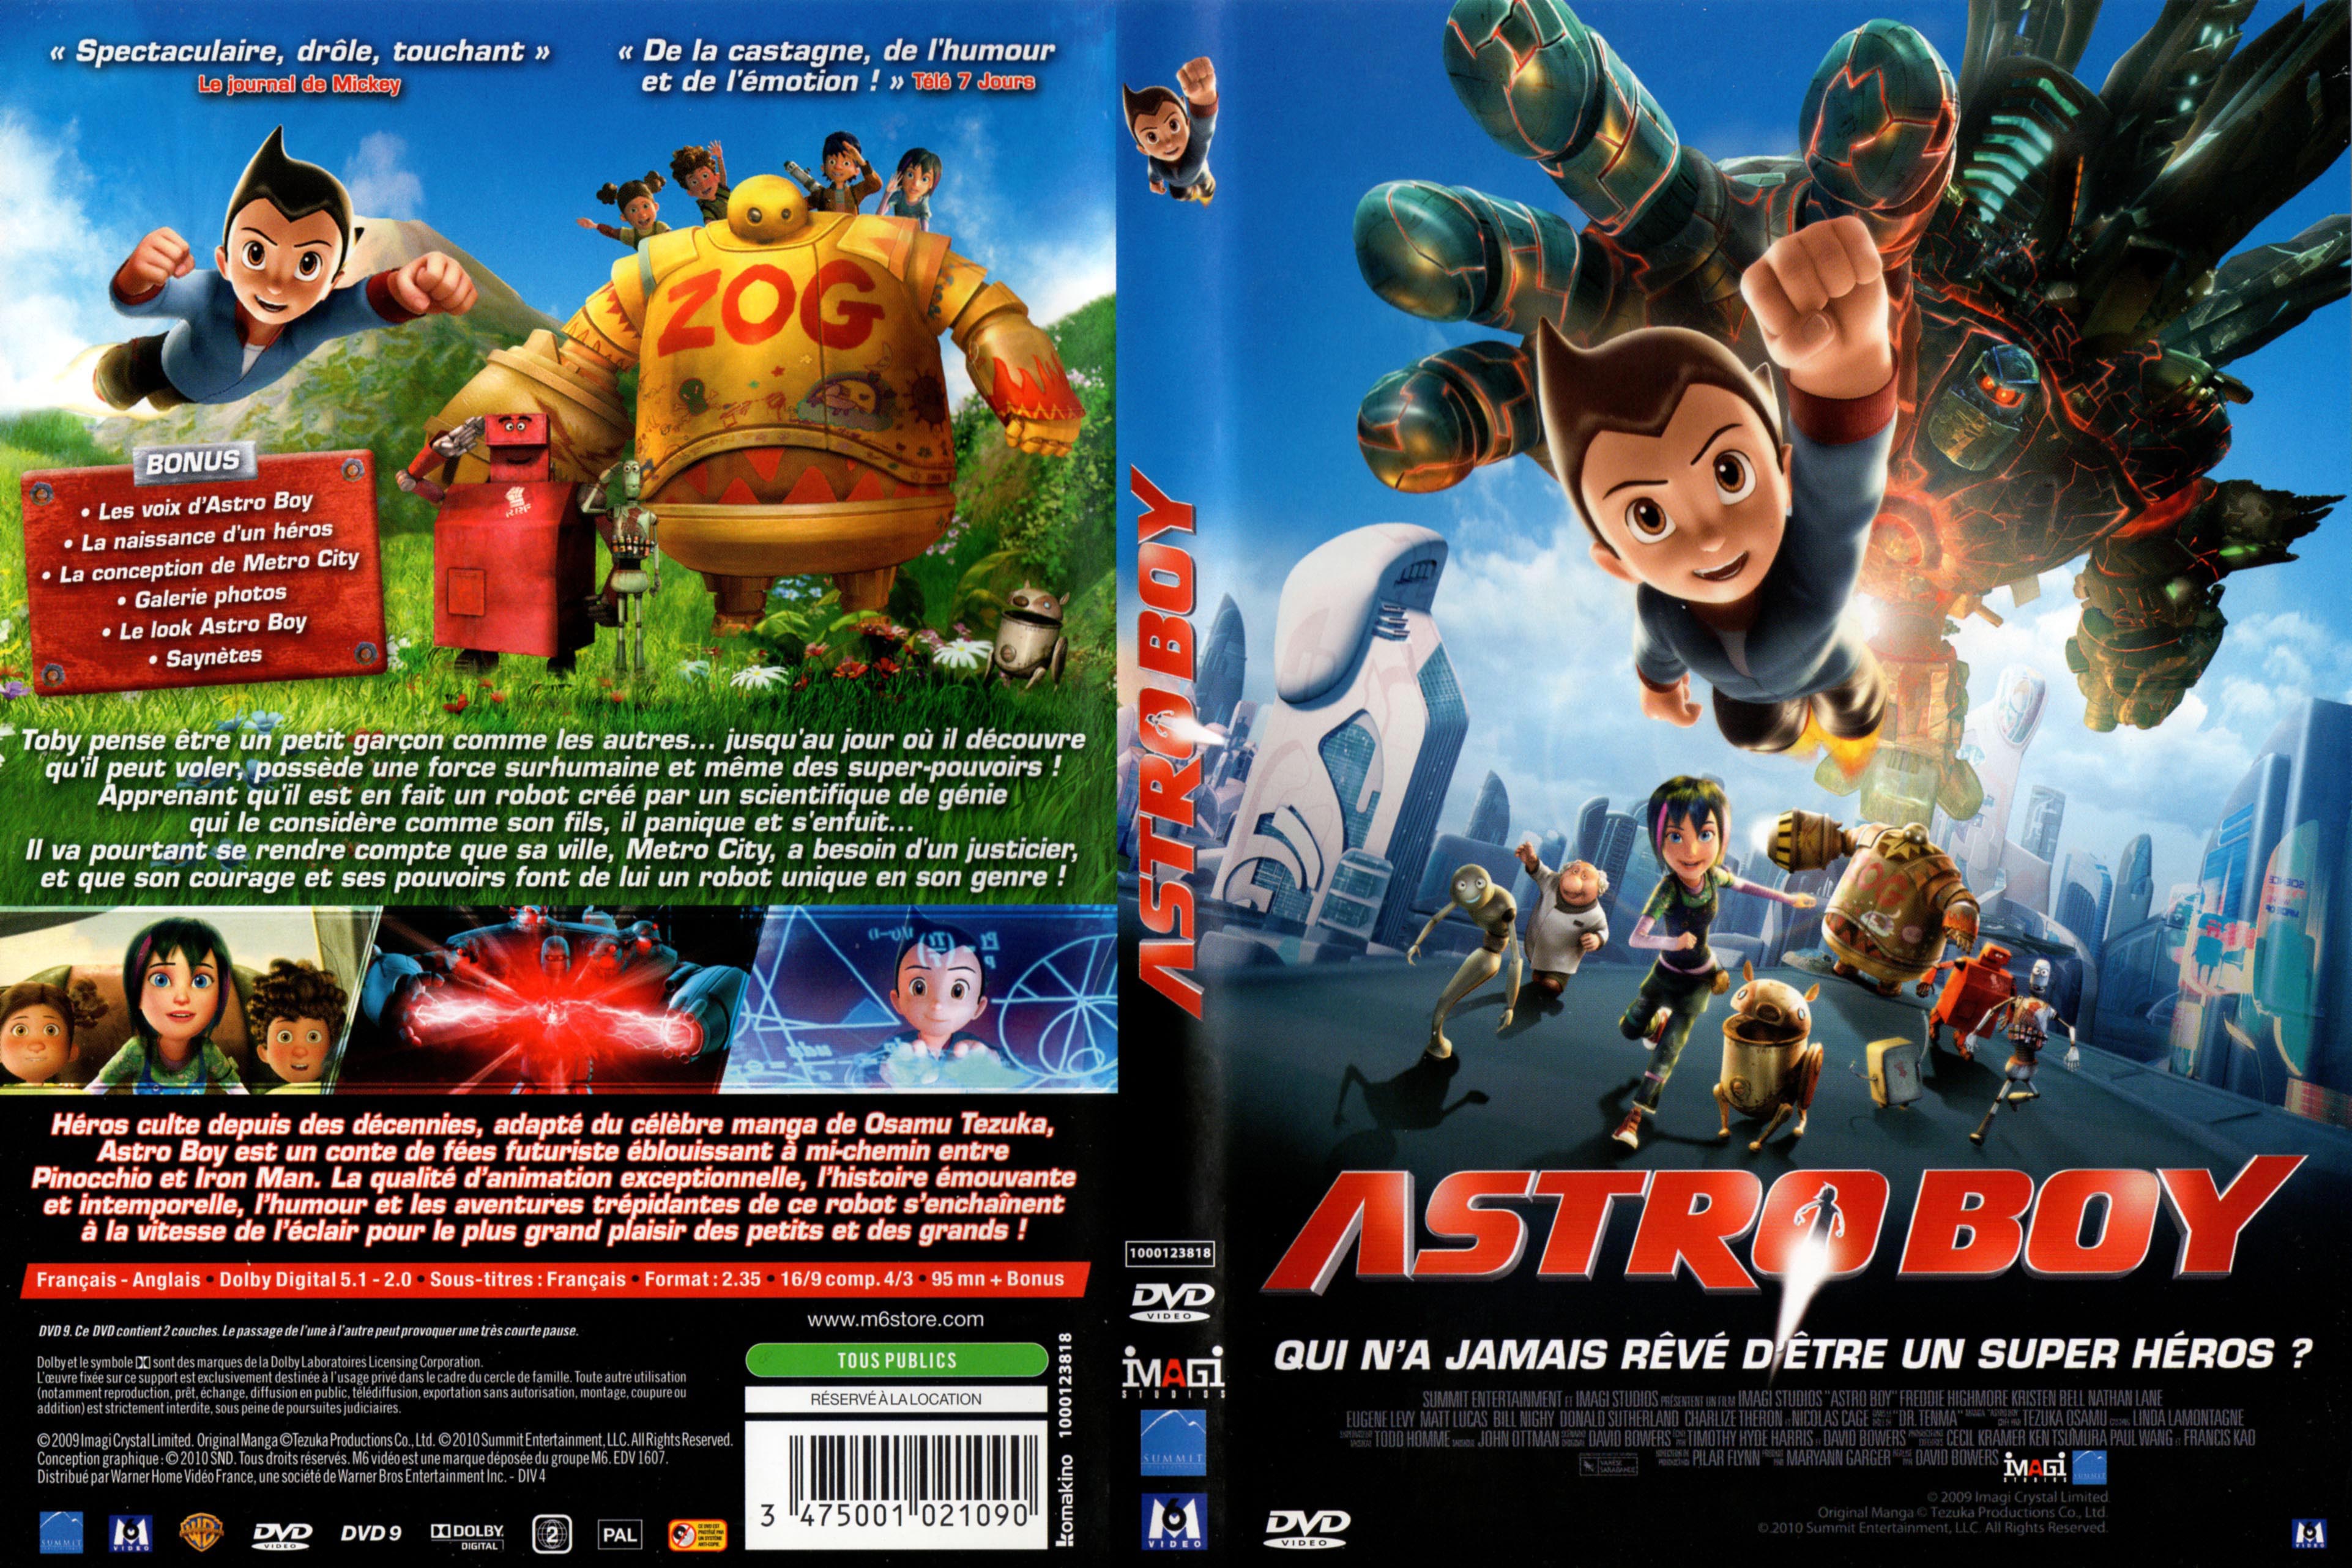 Jaquette DVD Astro boy